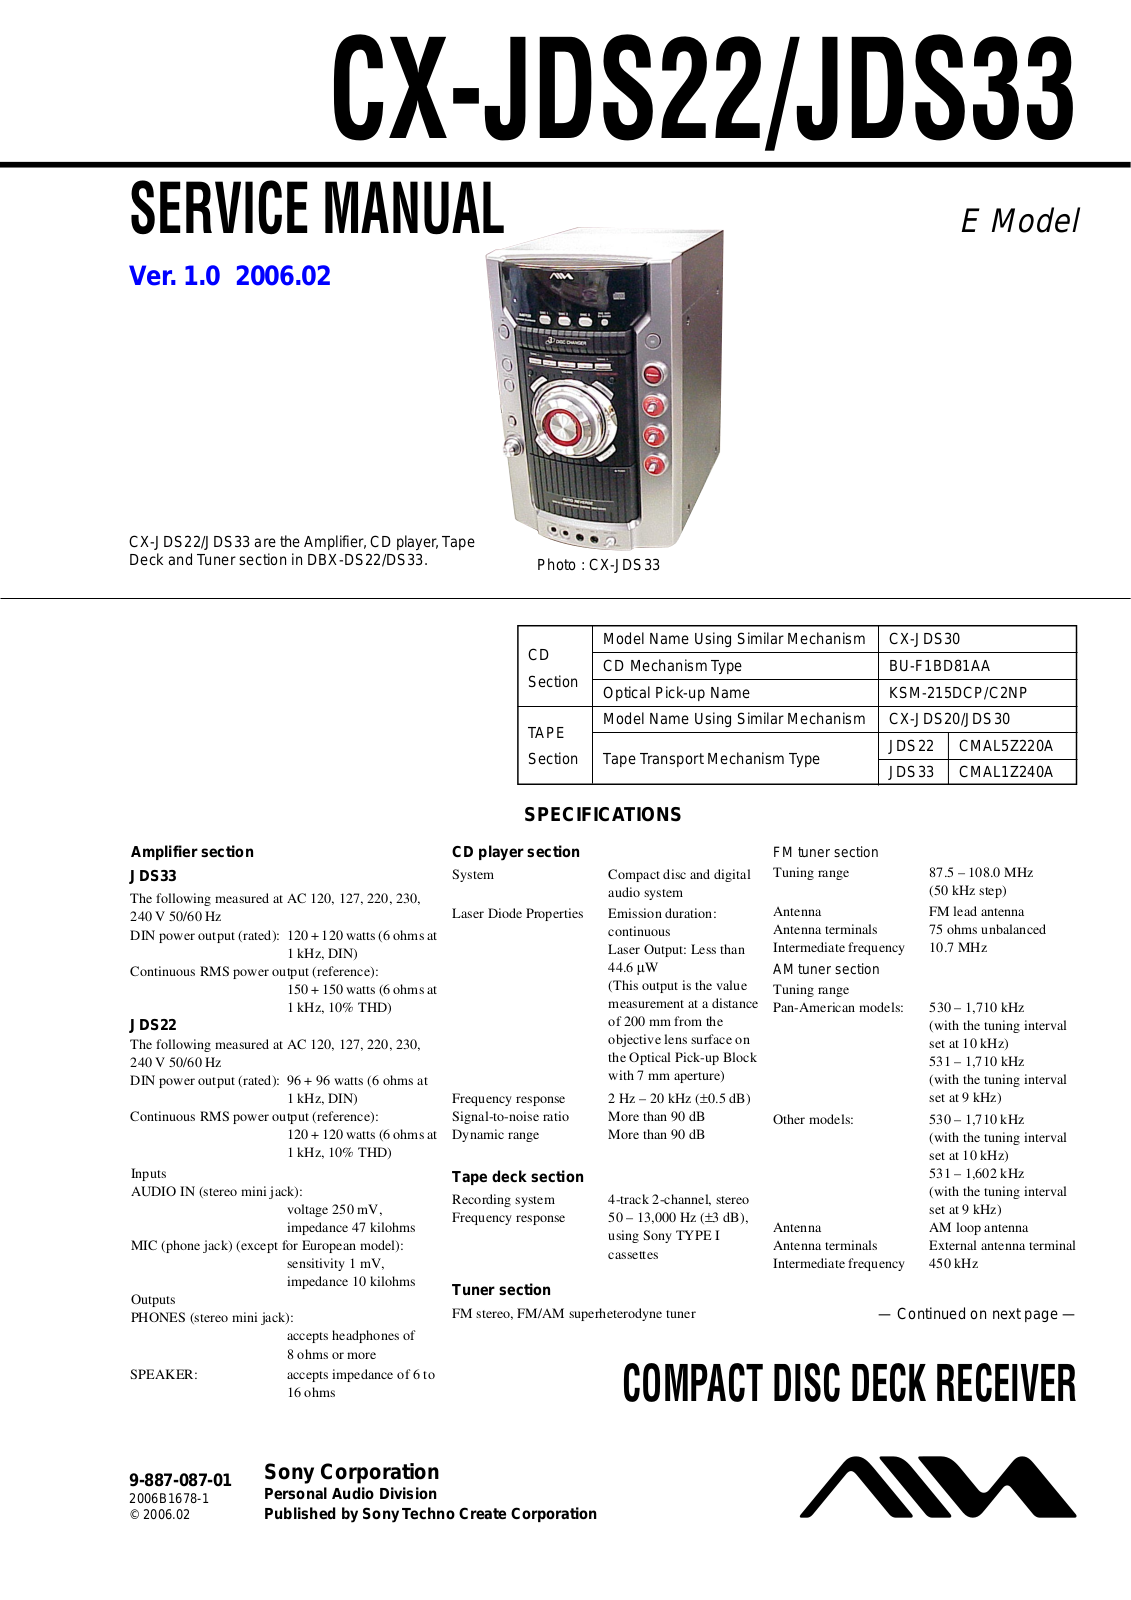 Aiwa CX-JDS22, CX-JDS33 Service Manual